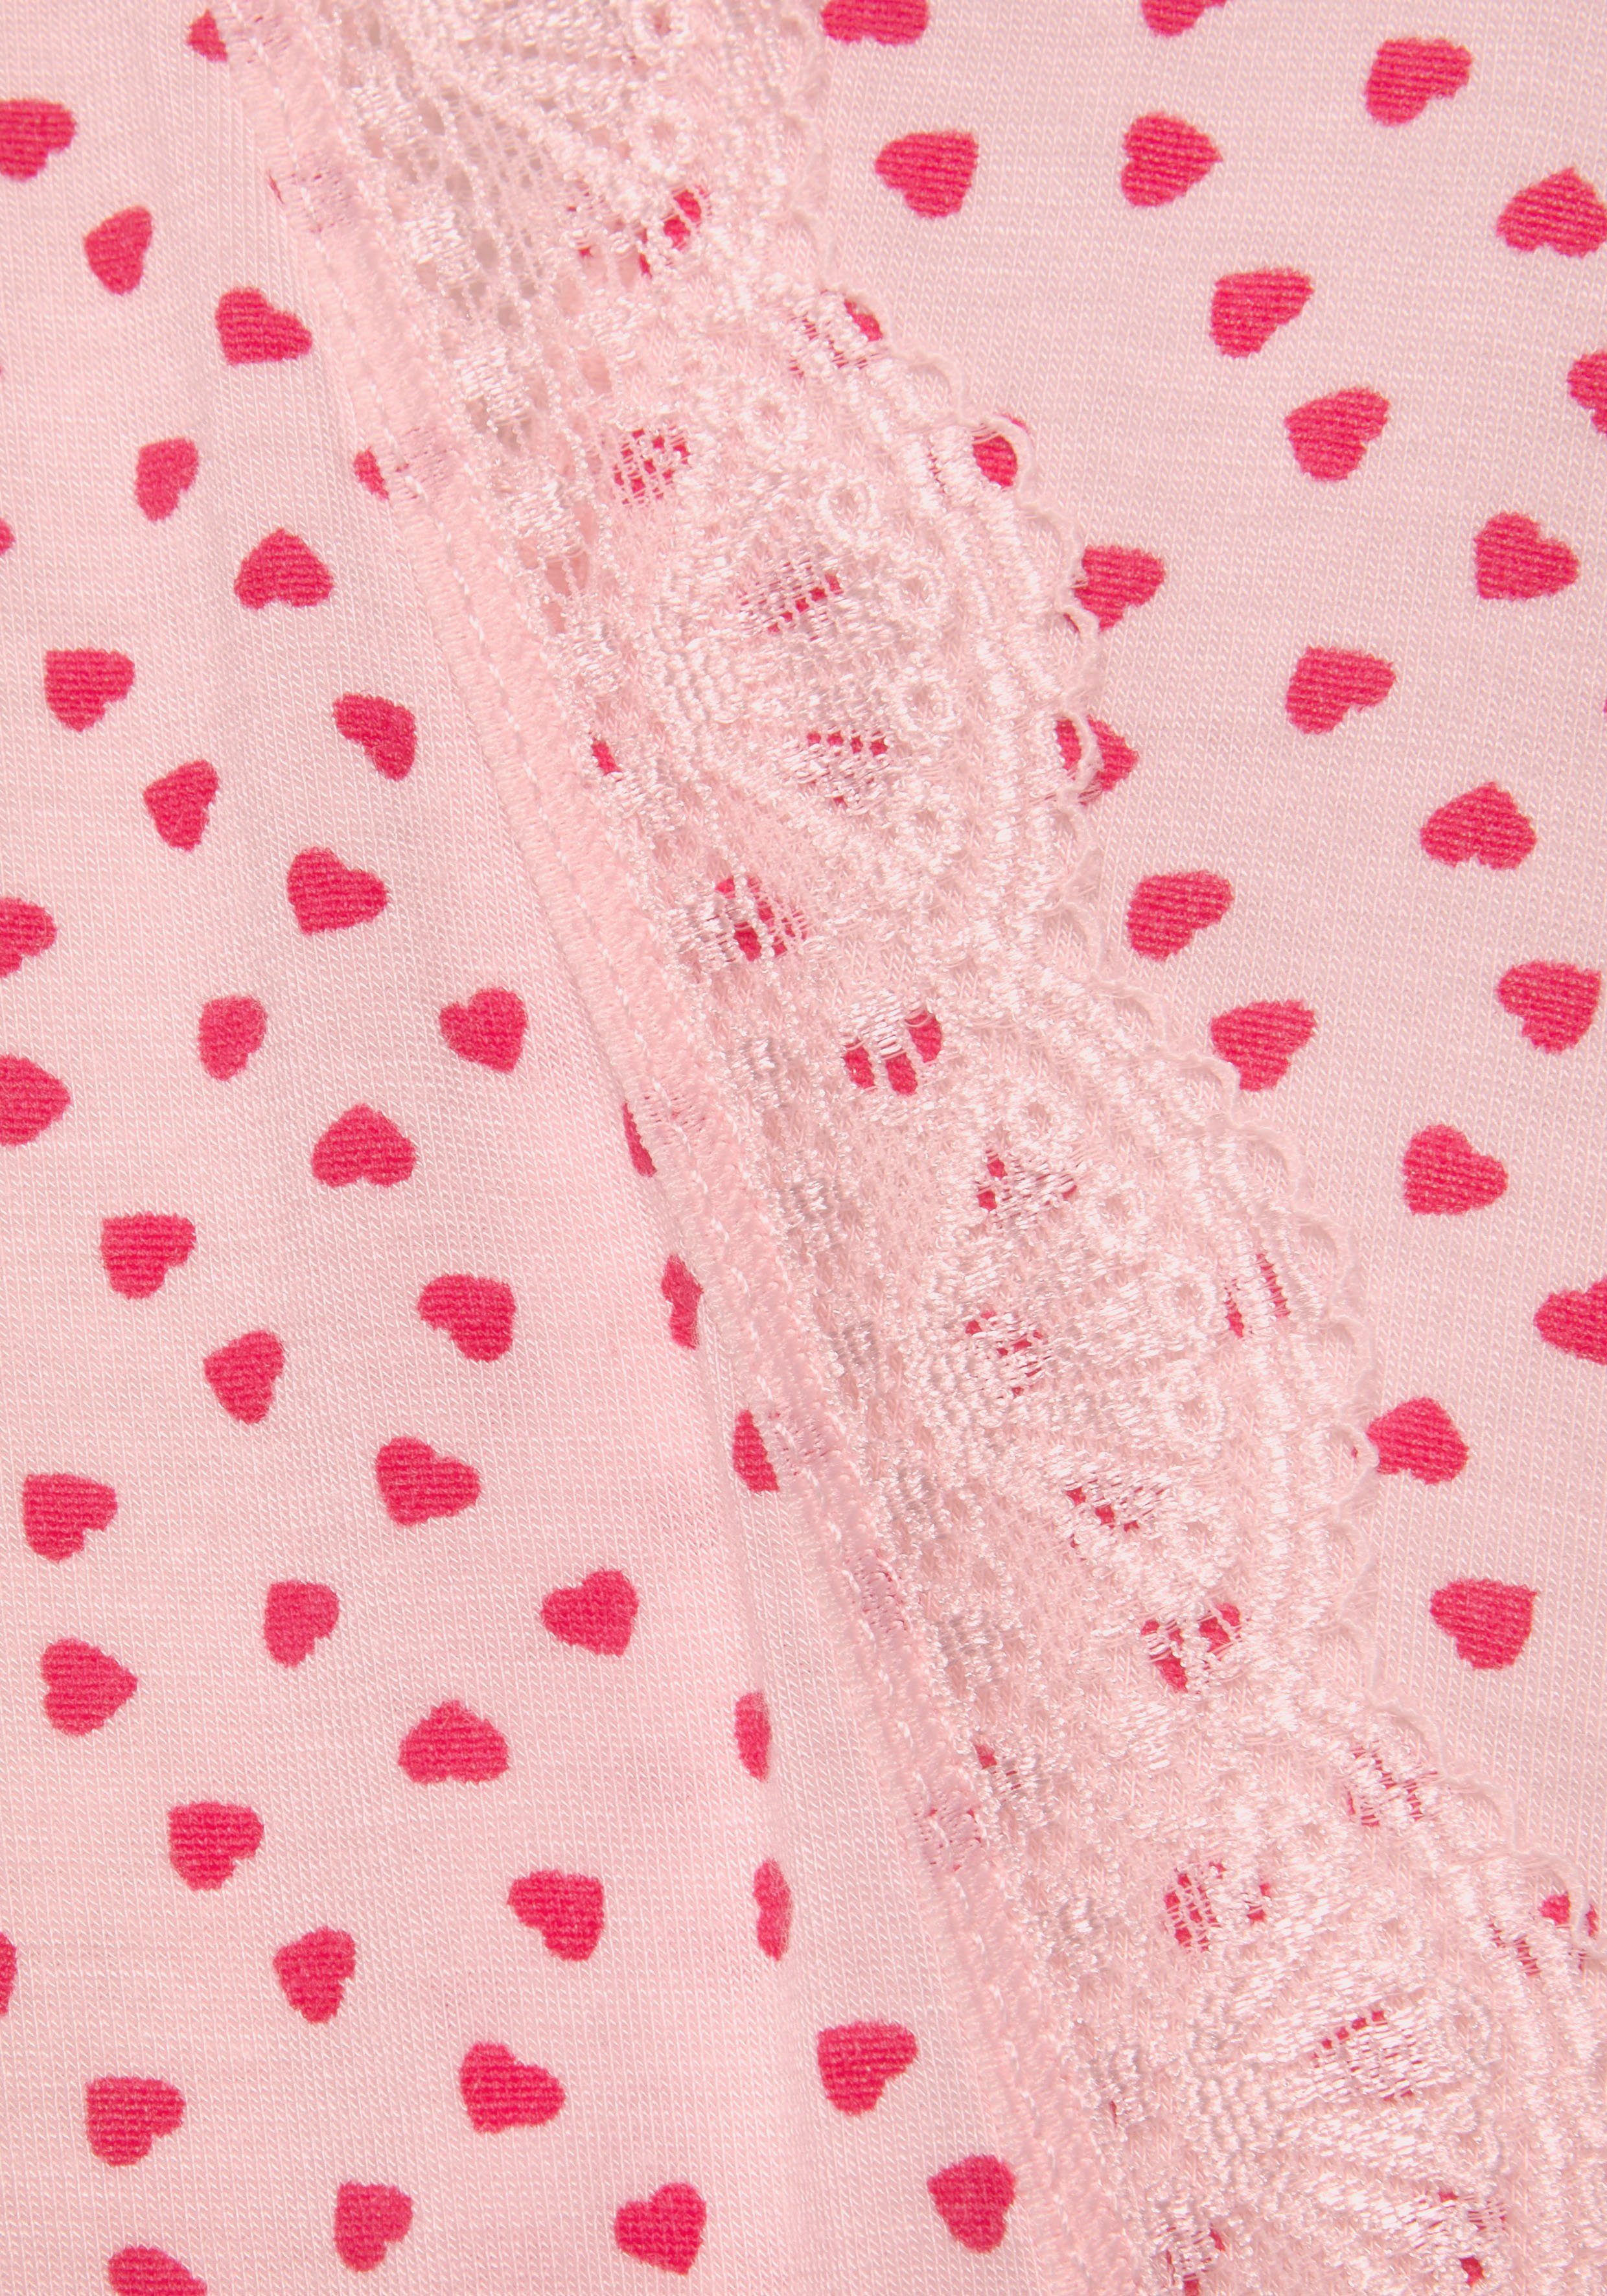 und Gürtel, Single-Jersey, hellrosa-gemustert Kurzform, s.Oliver Kimono, Herzchendruck Spitze mit